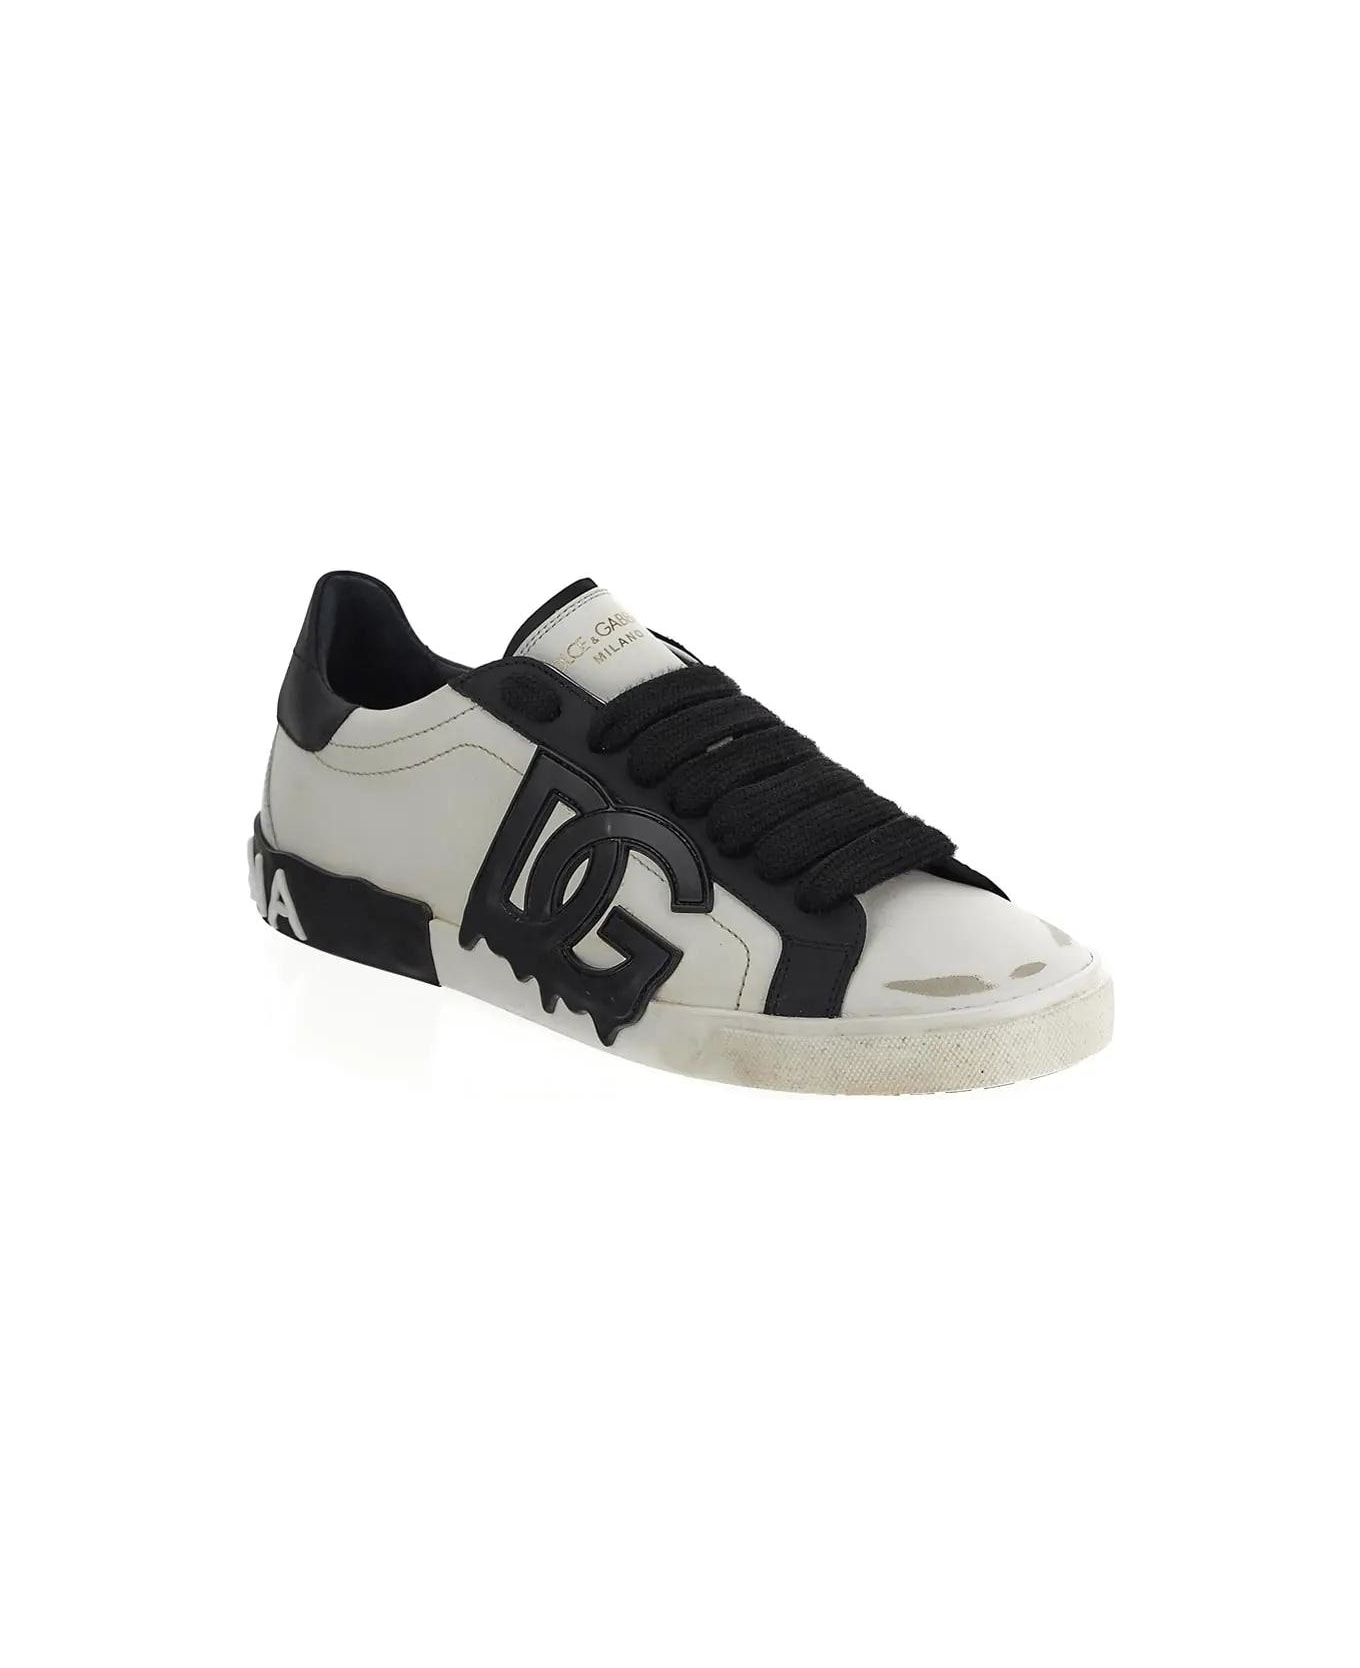 Dolce & Gabbana Low Sneakers - Bianco nero